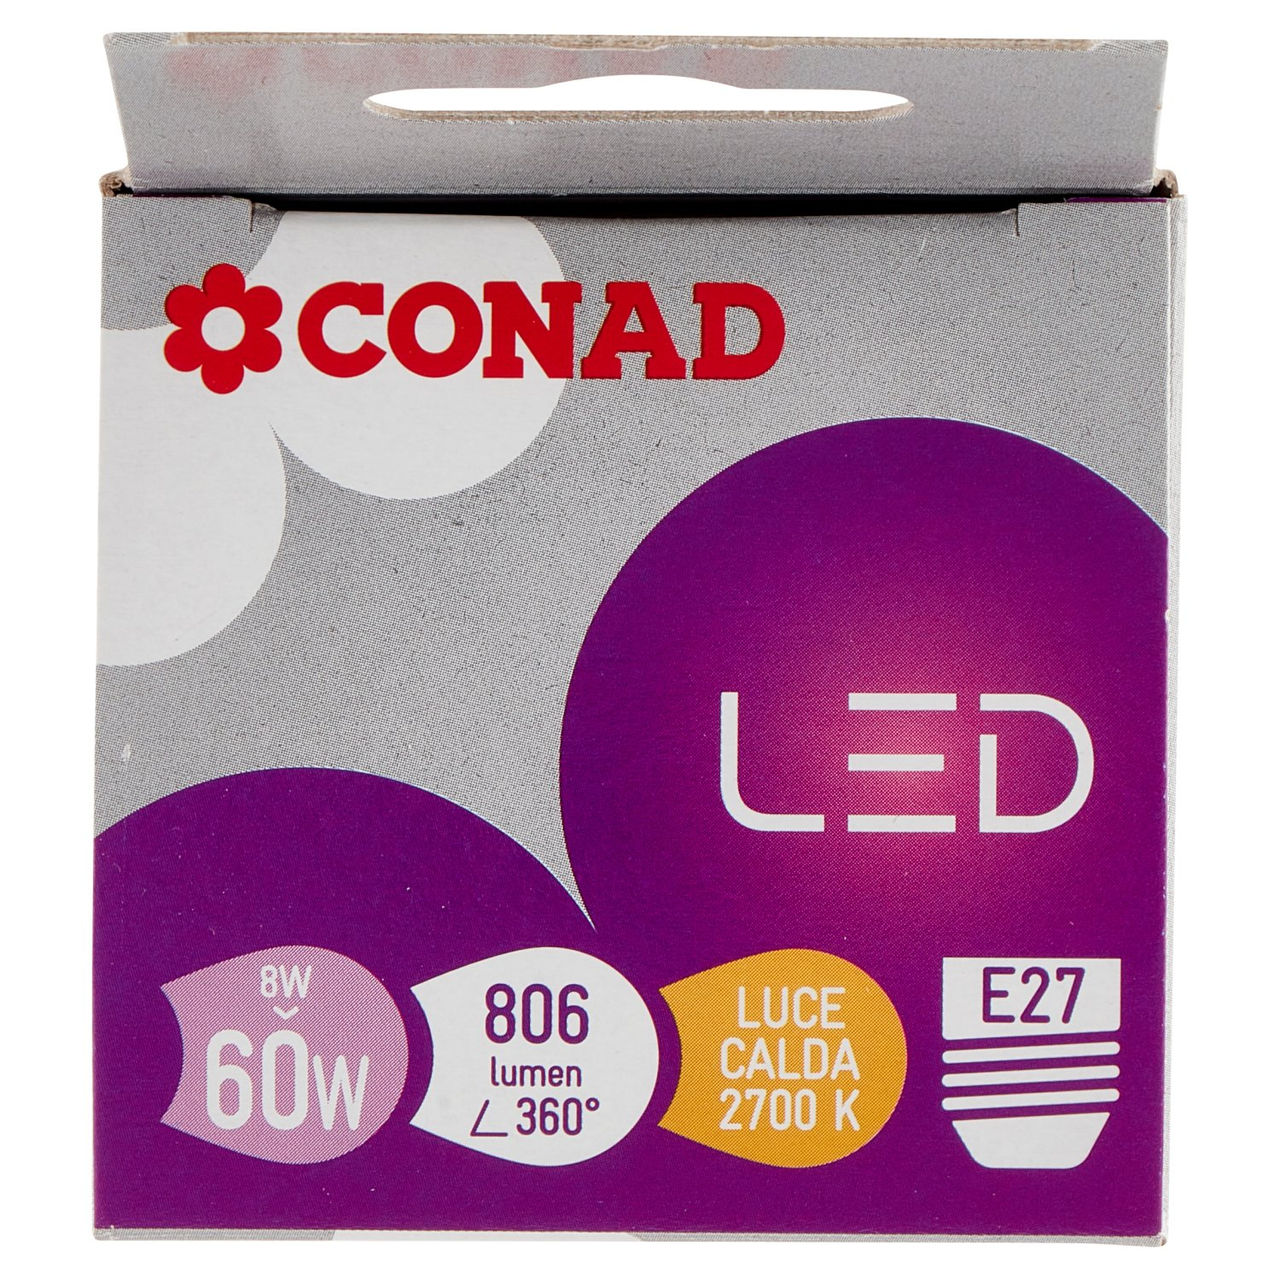 CONAD Led 8W 806 Lumen E27 Luce Calda